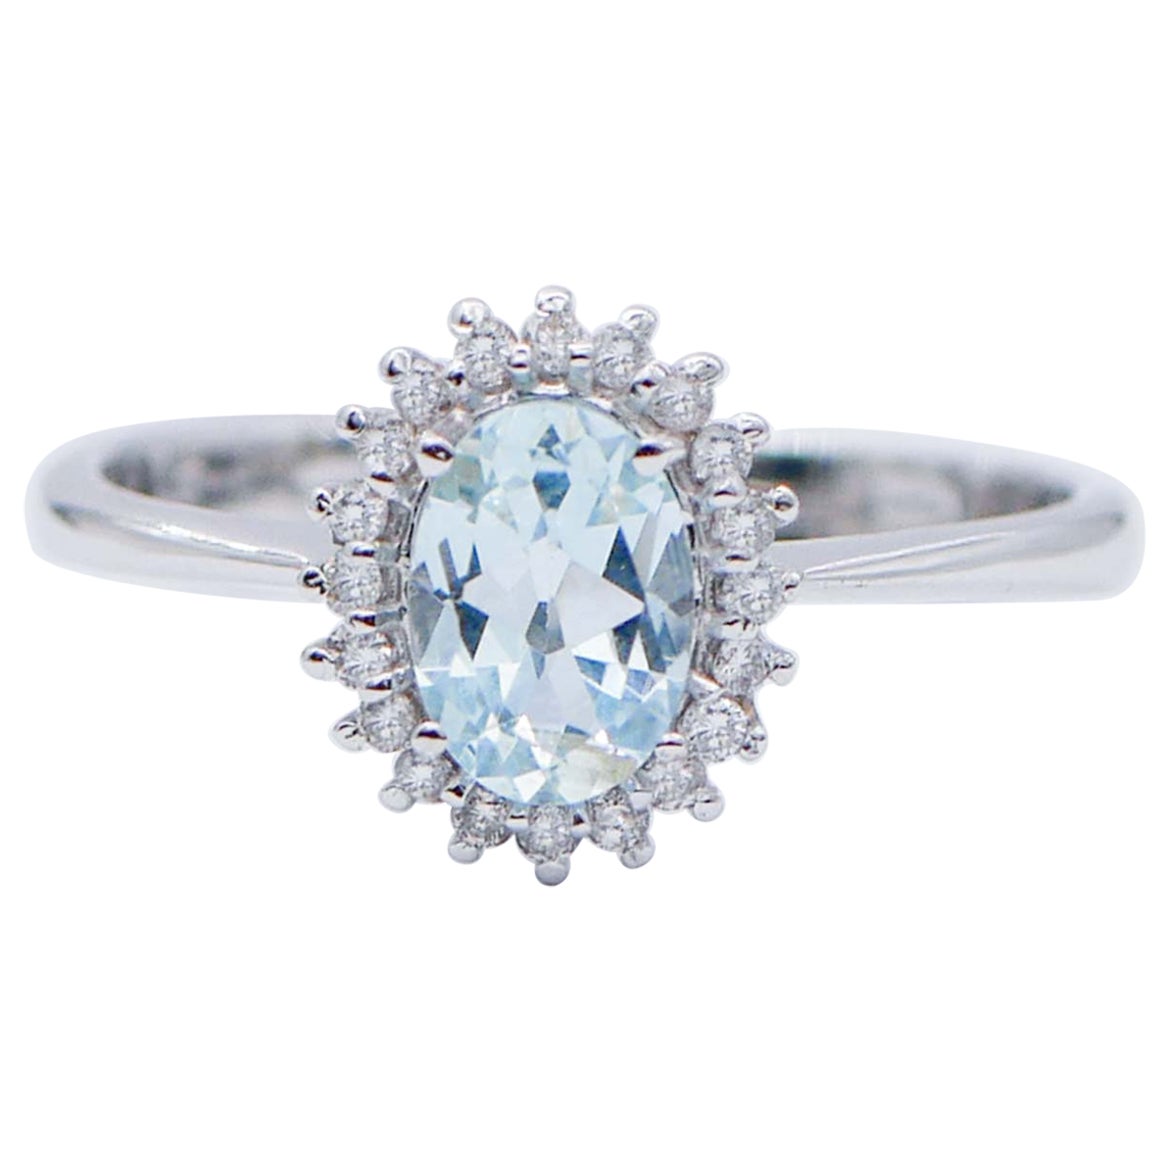 Aquamarine, Diamonds, 18 Karat White Gold Ring For Sale